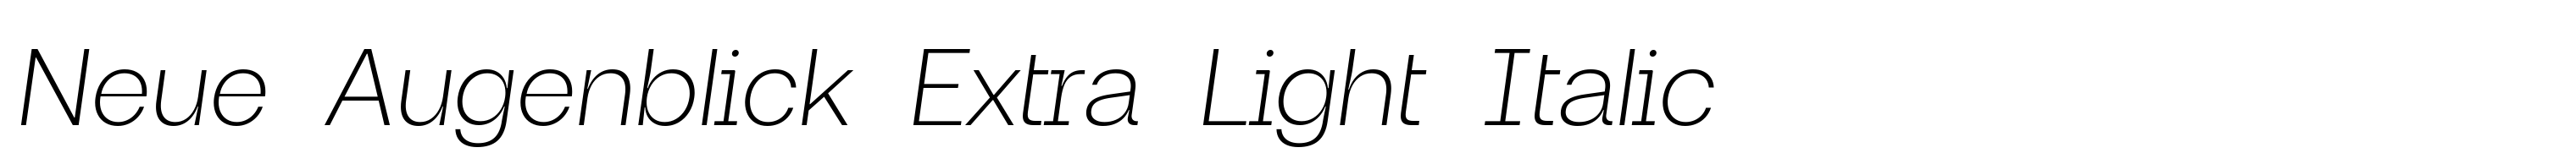 Neue Augenblick Extra Light Italic